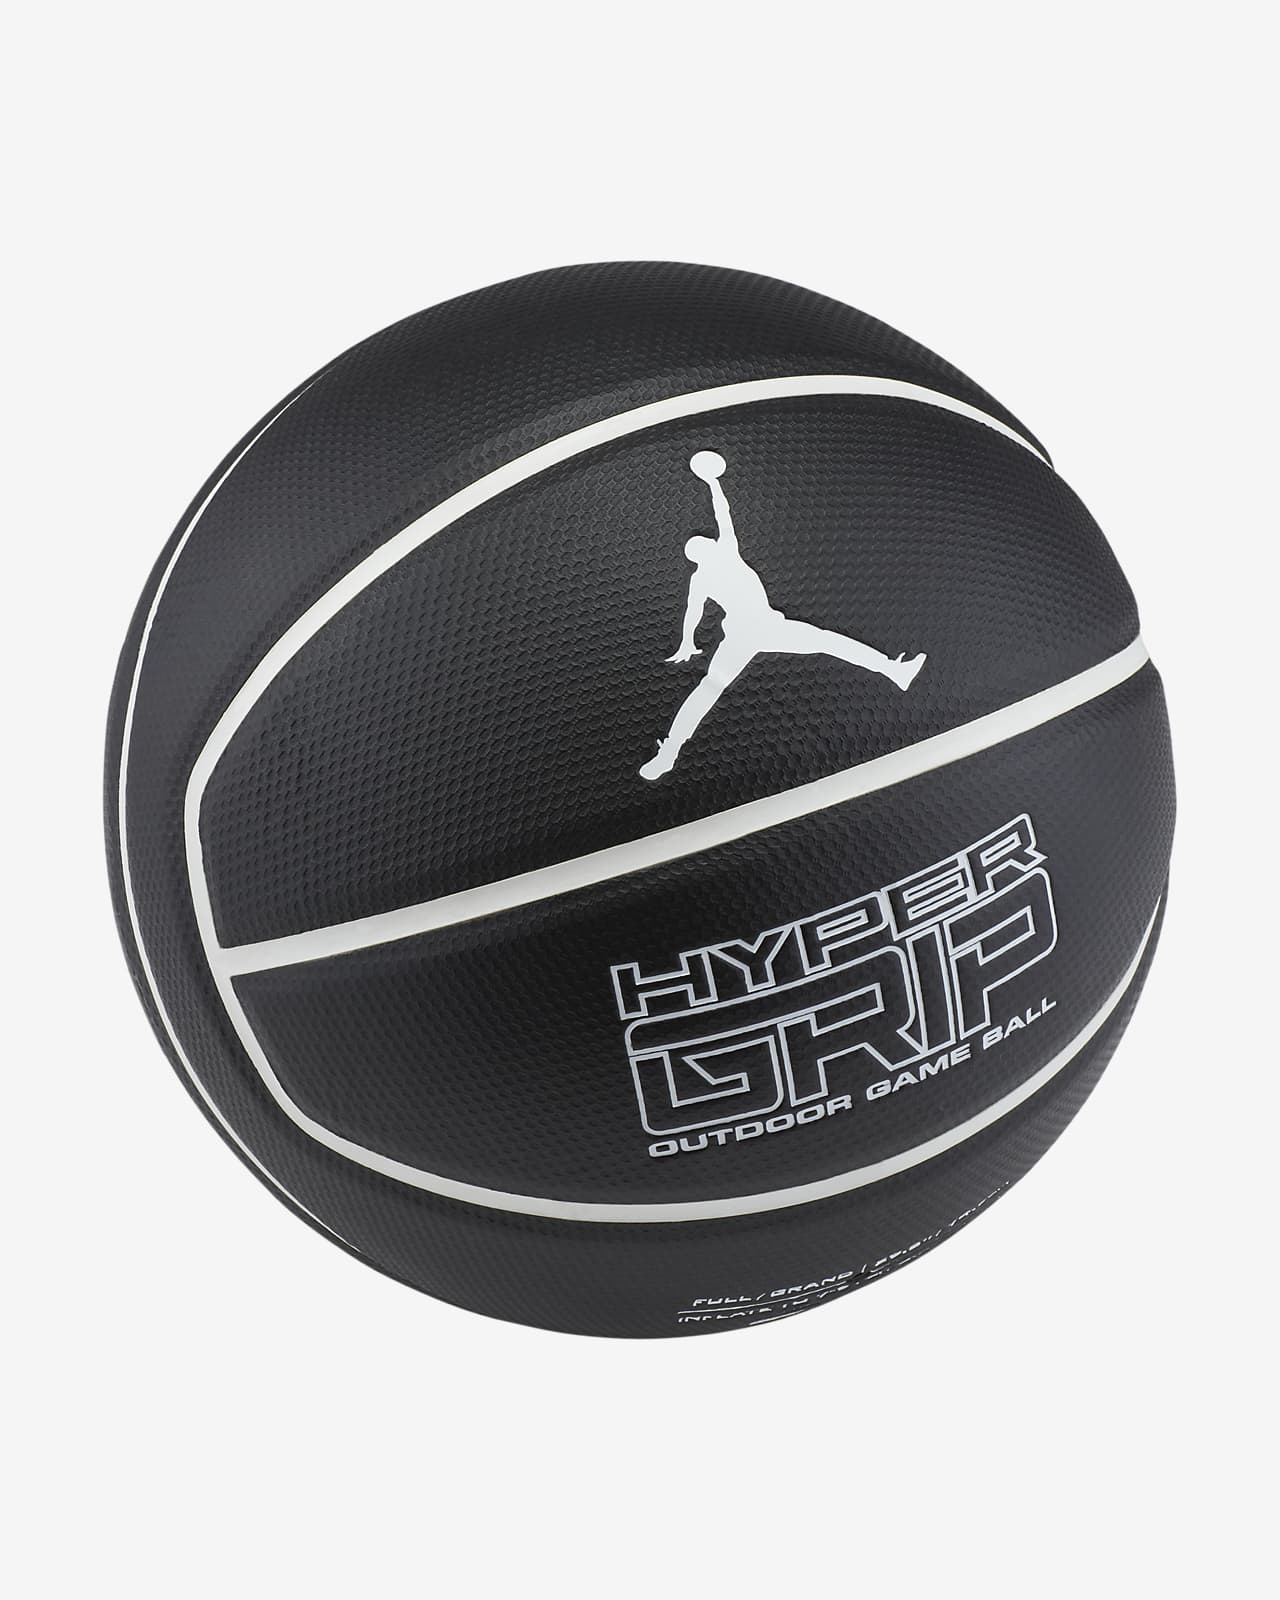 Jordan HyperGrip 4P 籃球。Nike TW